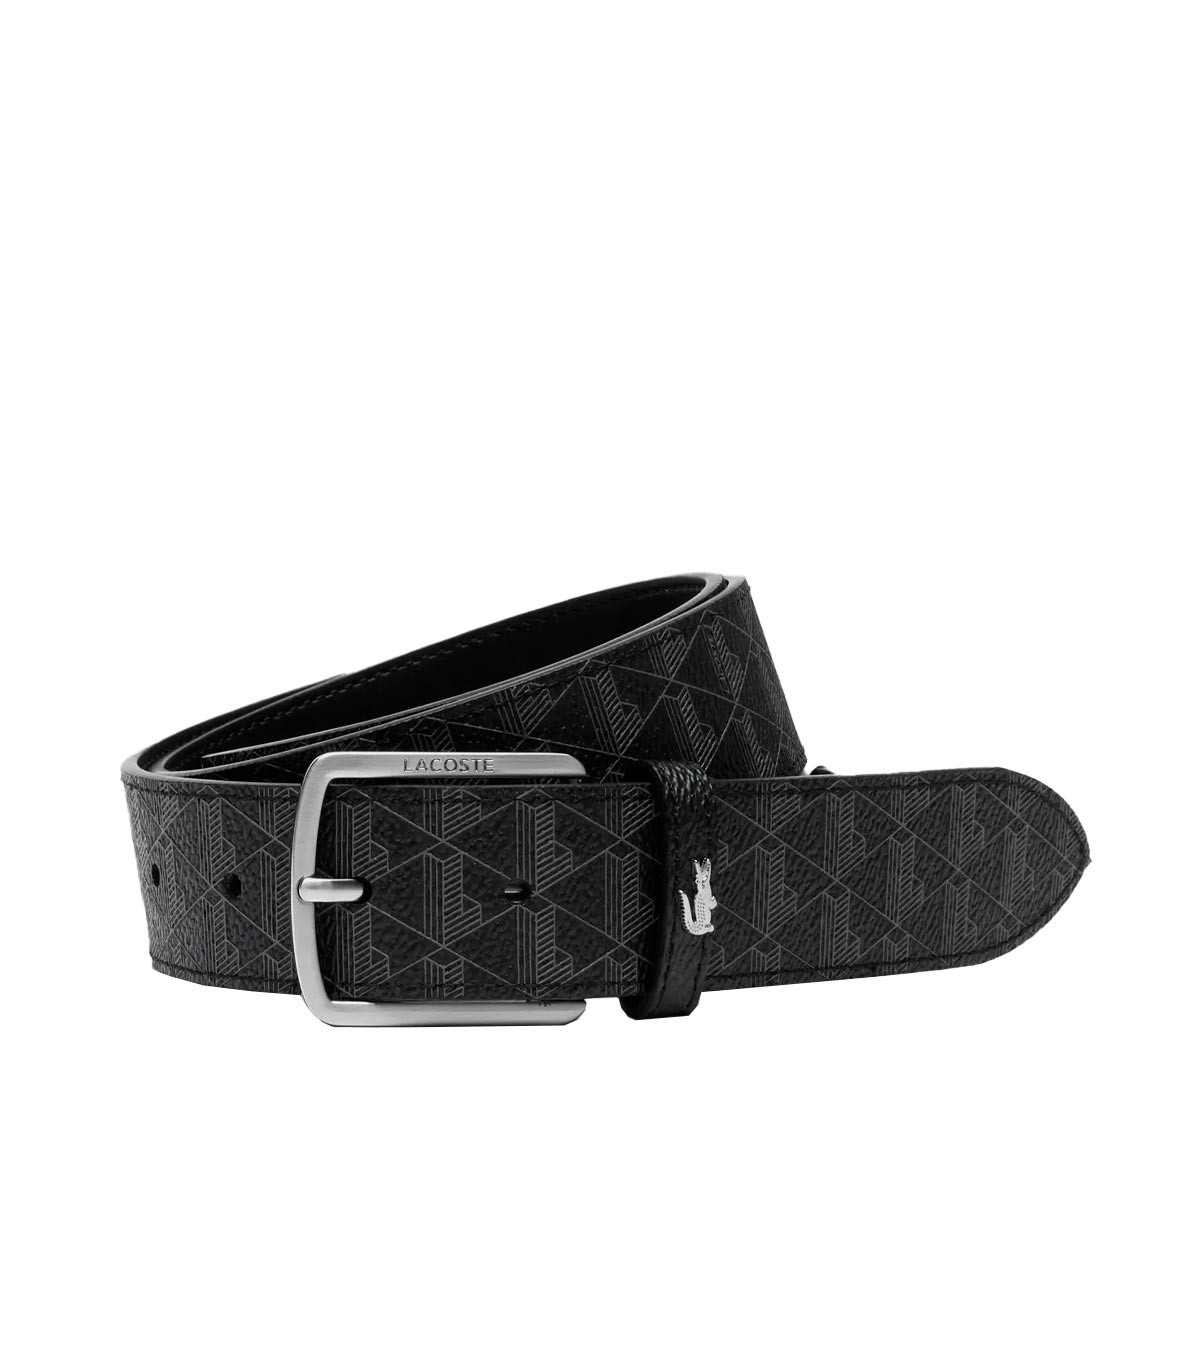 Lacoste - Cinturón Leather Goods - Gris